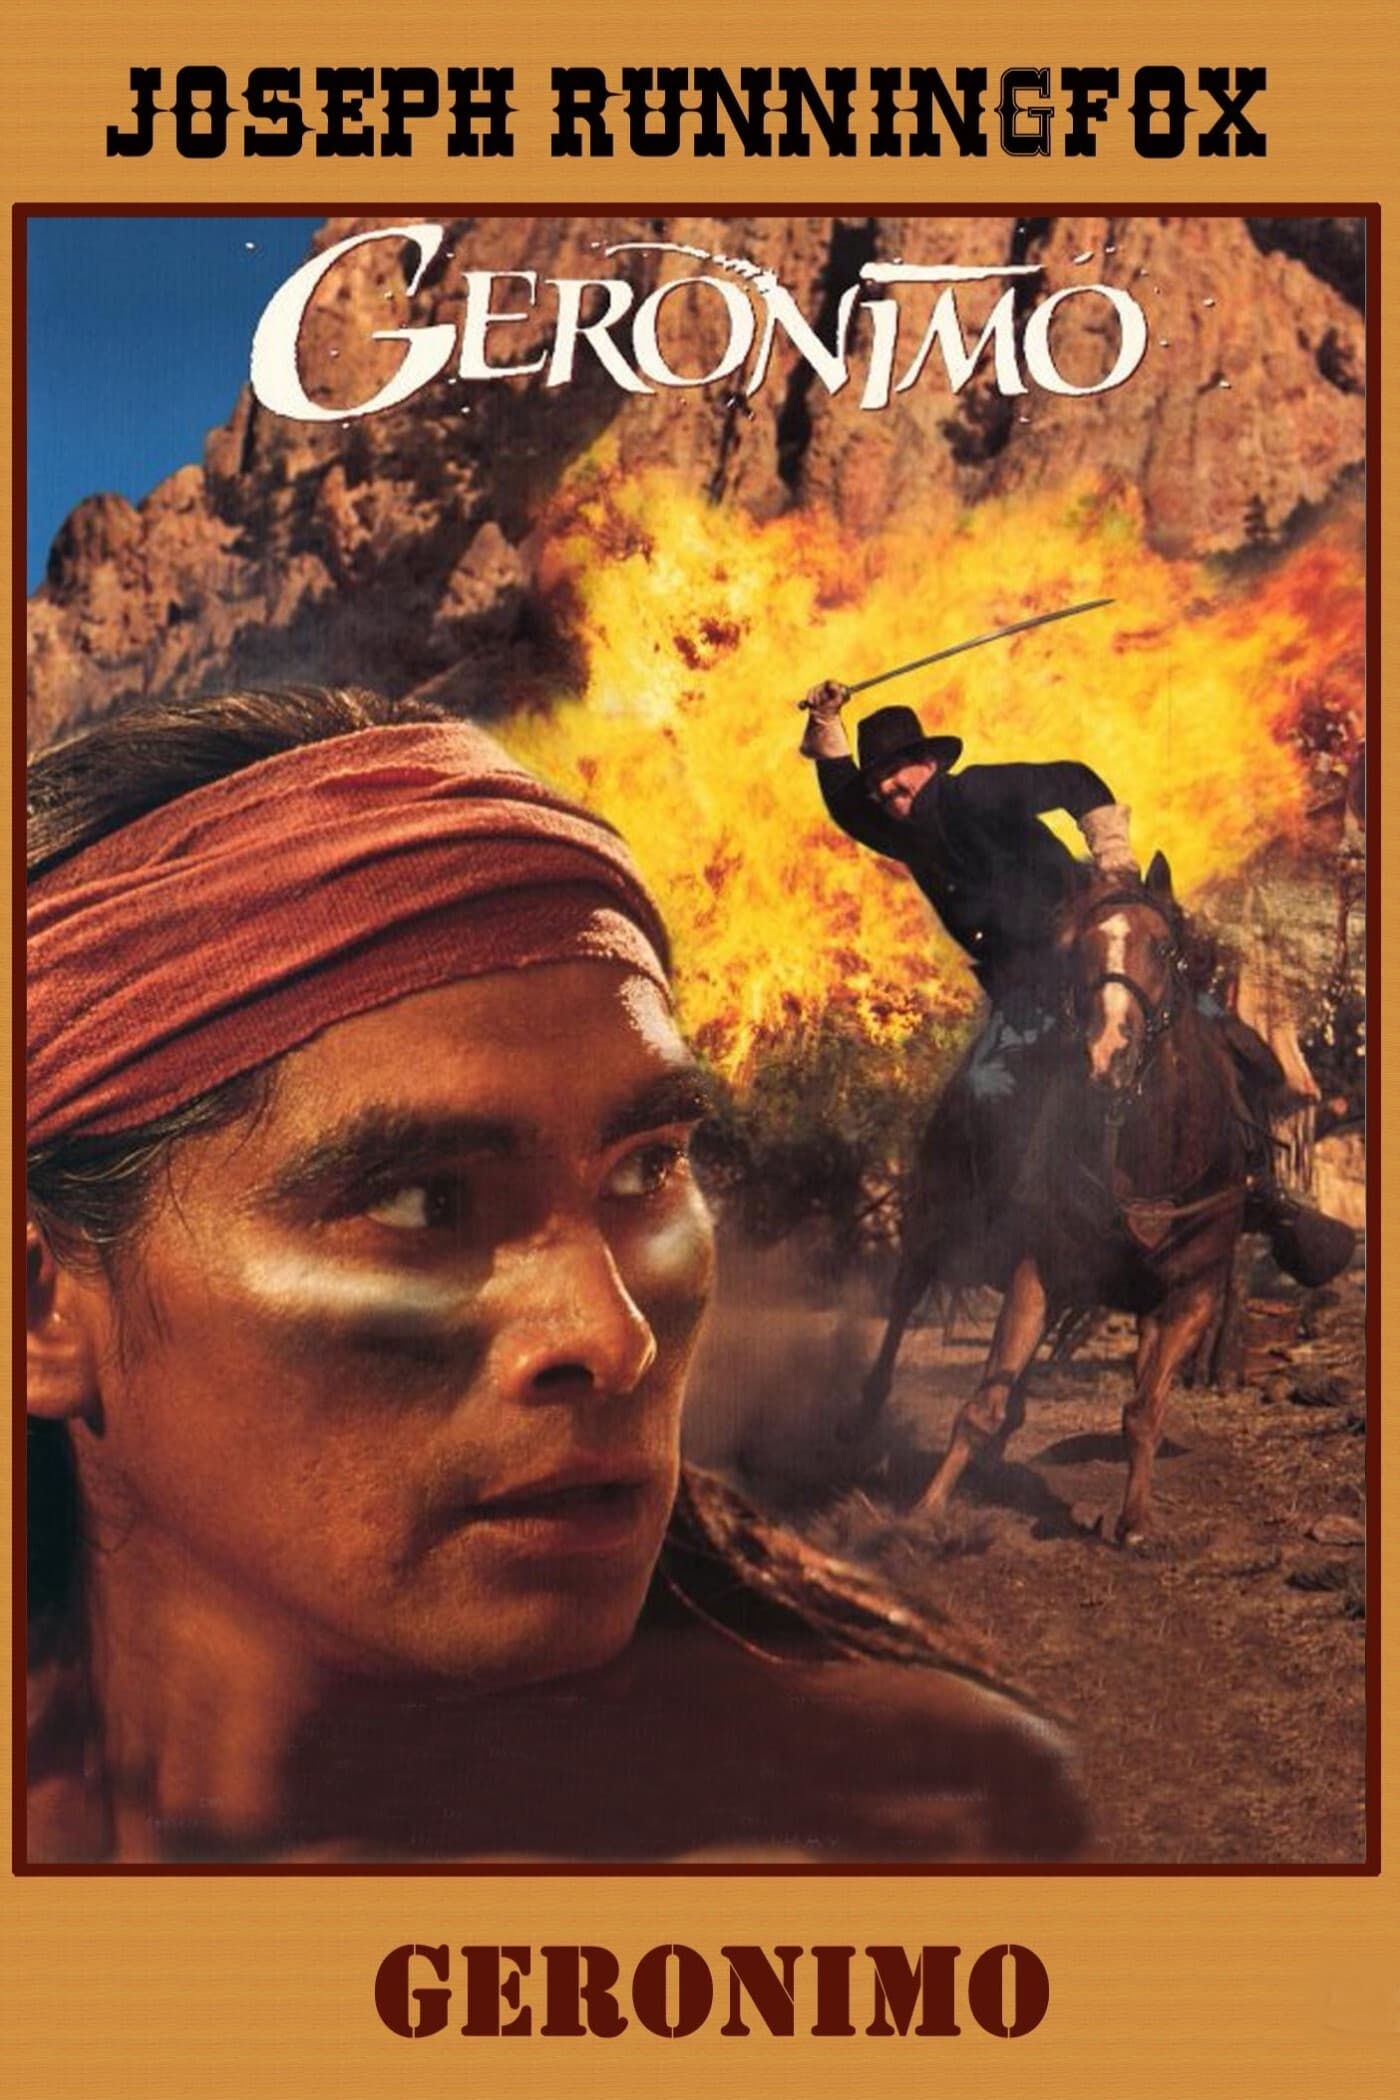 Die Blutrache des Geronimo (1993)